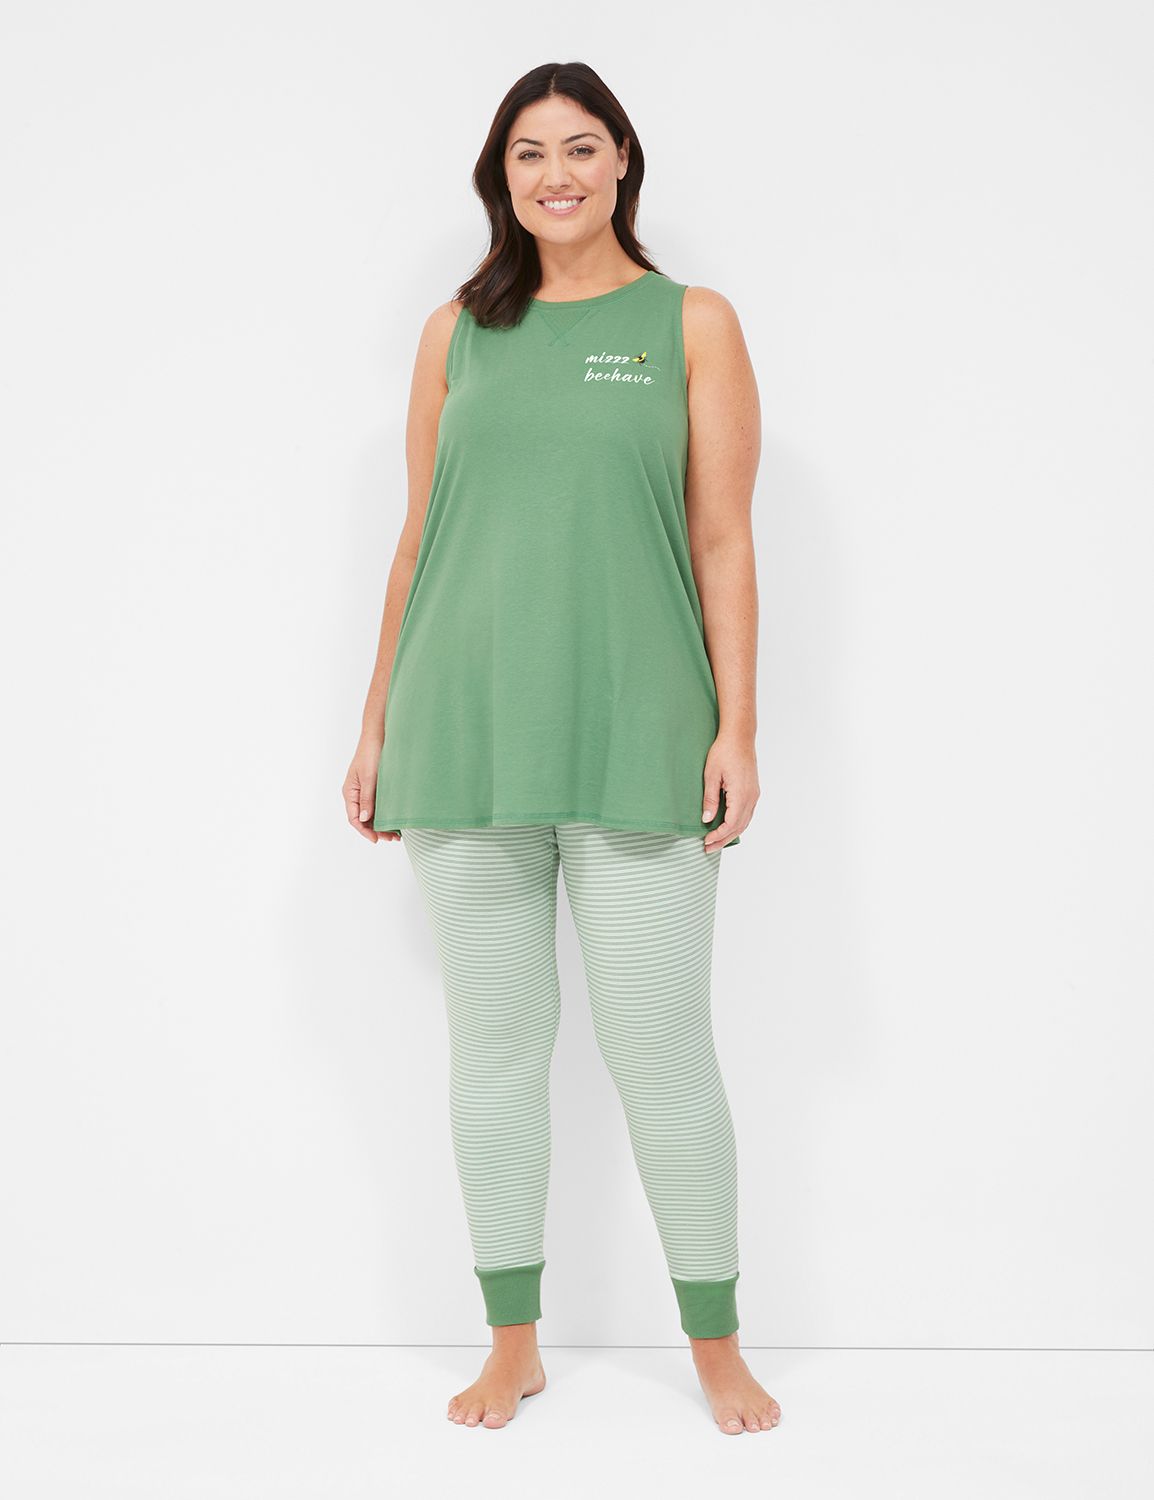 VENTELAN Women's Capri Pajama Sets Plus Size Sleepwear Top with Capri Pants  2 Piece Loungewear Set S-XXXL : : Clothing, Shoes & Accessories